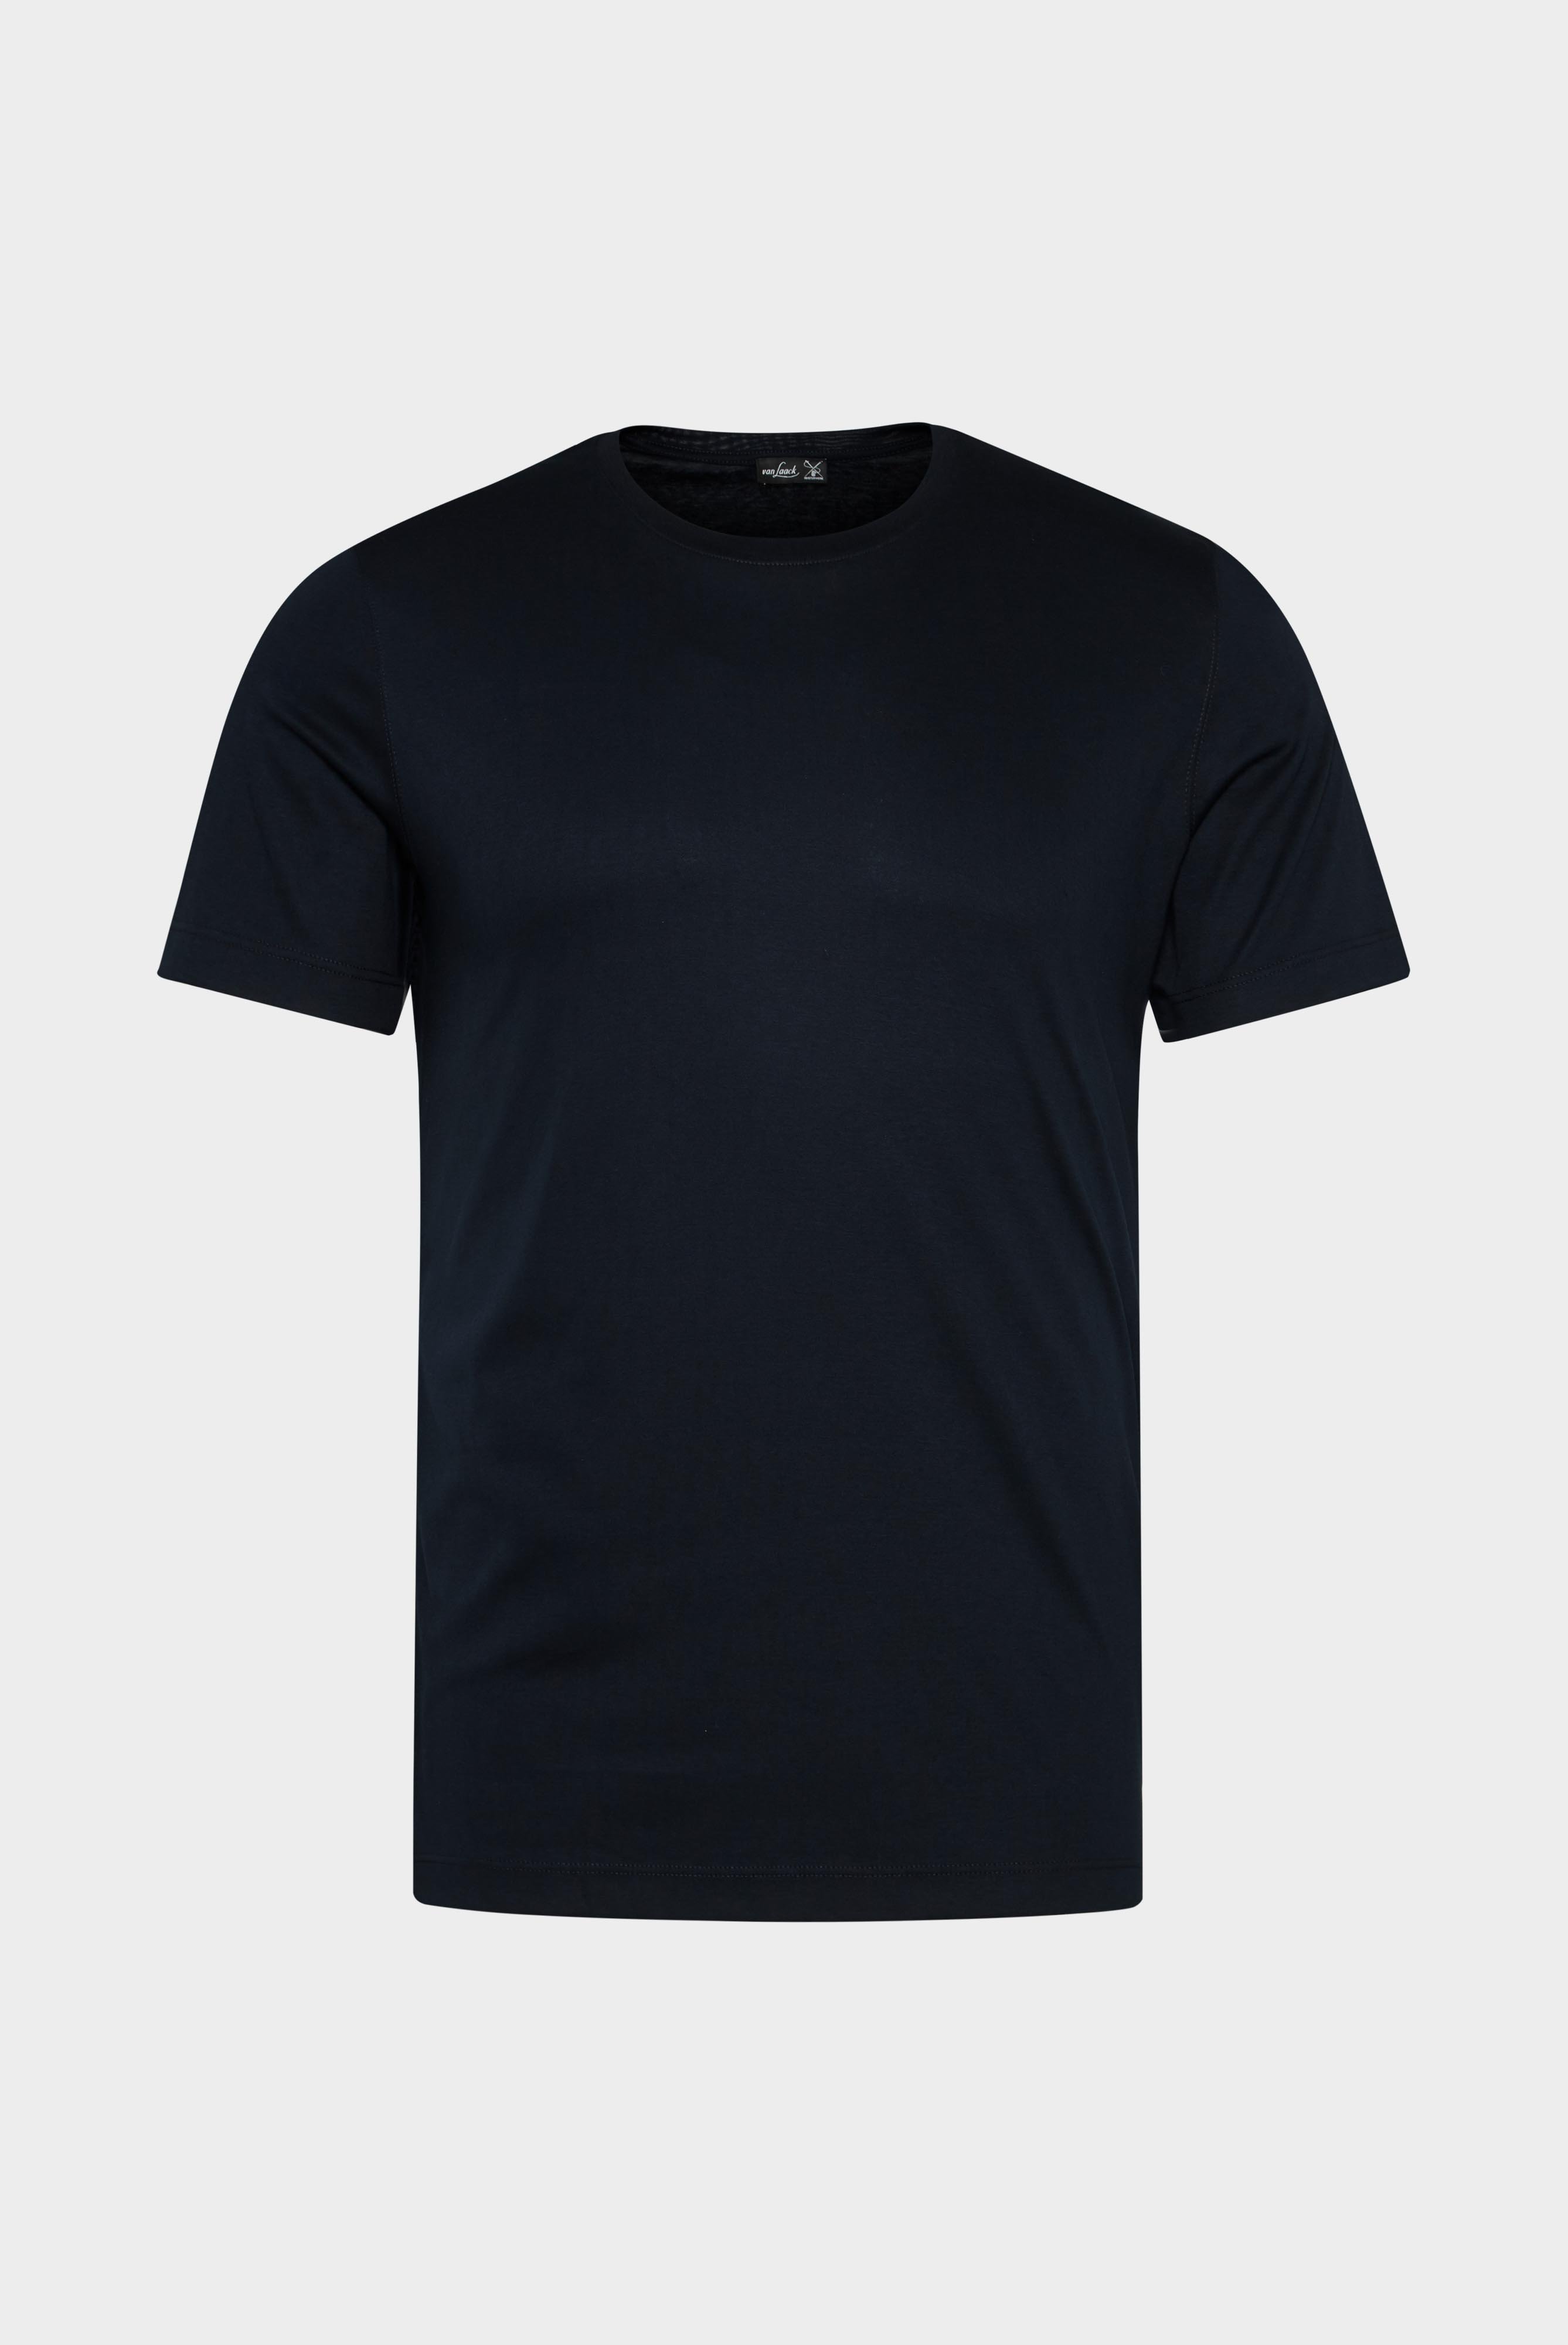 T-Shirts+Rundhals Jersey T-Shirt Slim Fit+20.1717.UX.180031.790.L